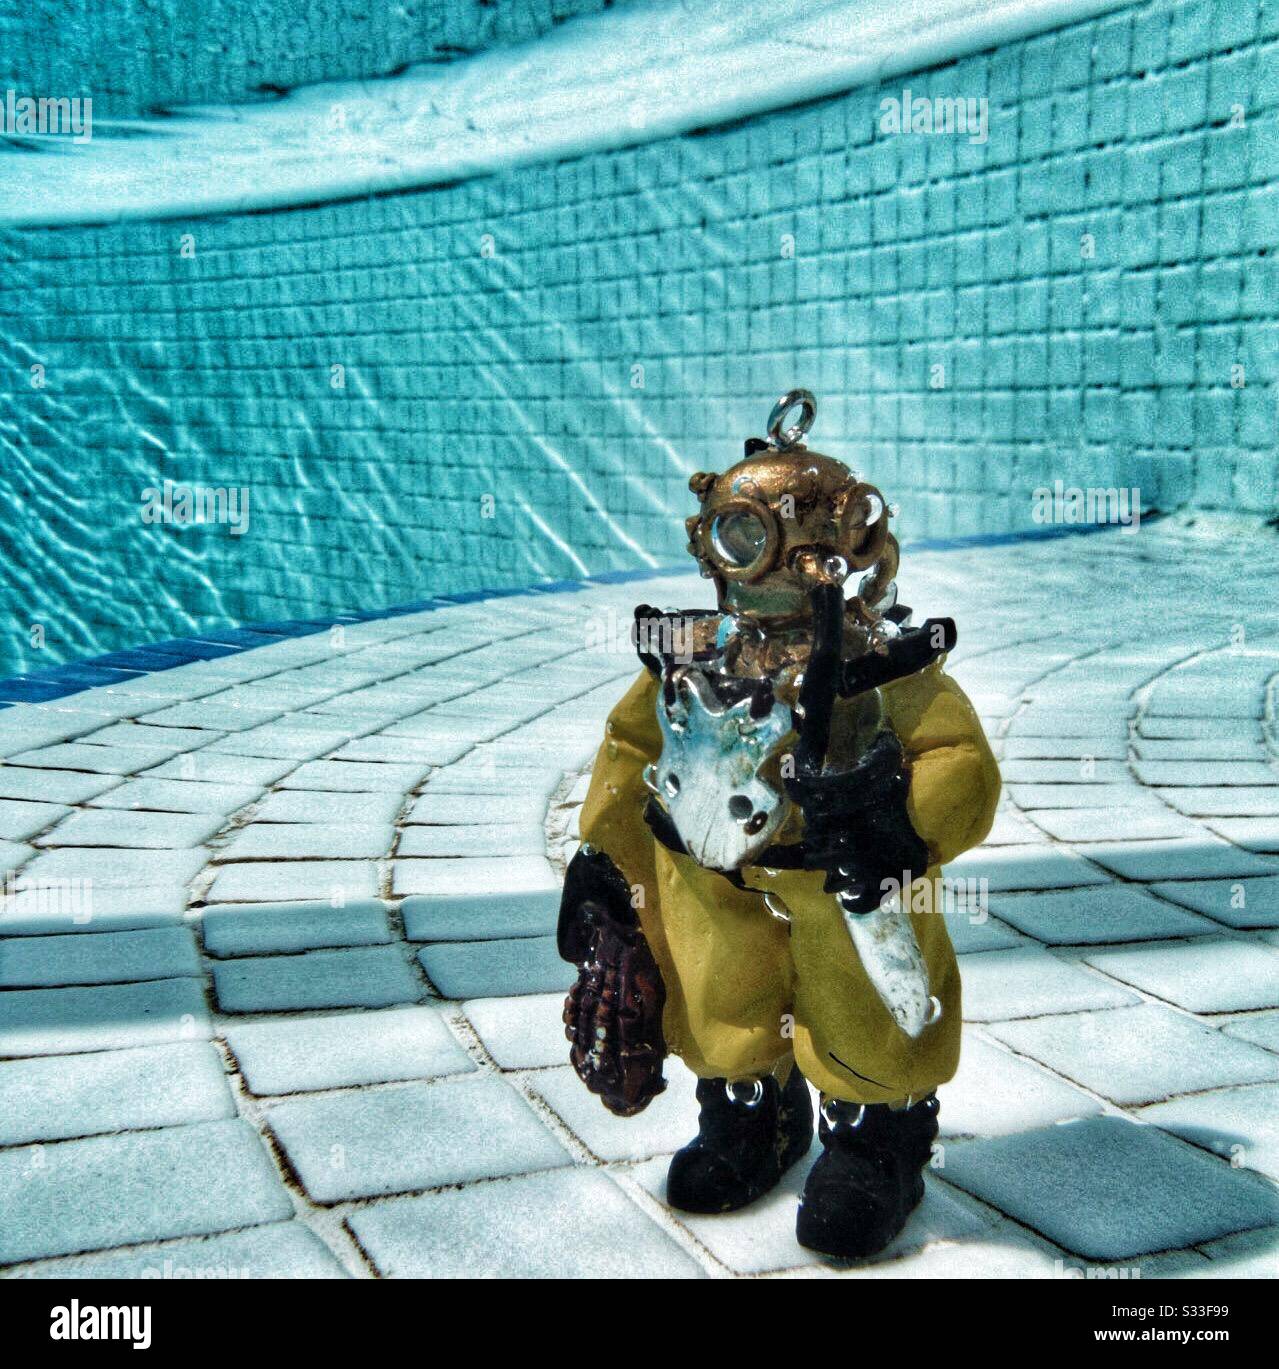 Jouet plongeur en haute mer dans la piscine Banque D'Images